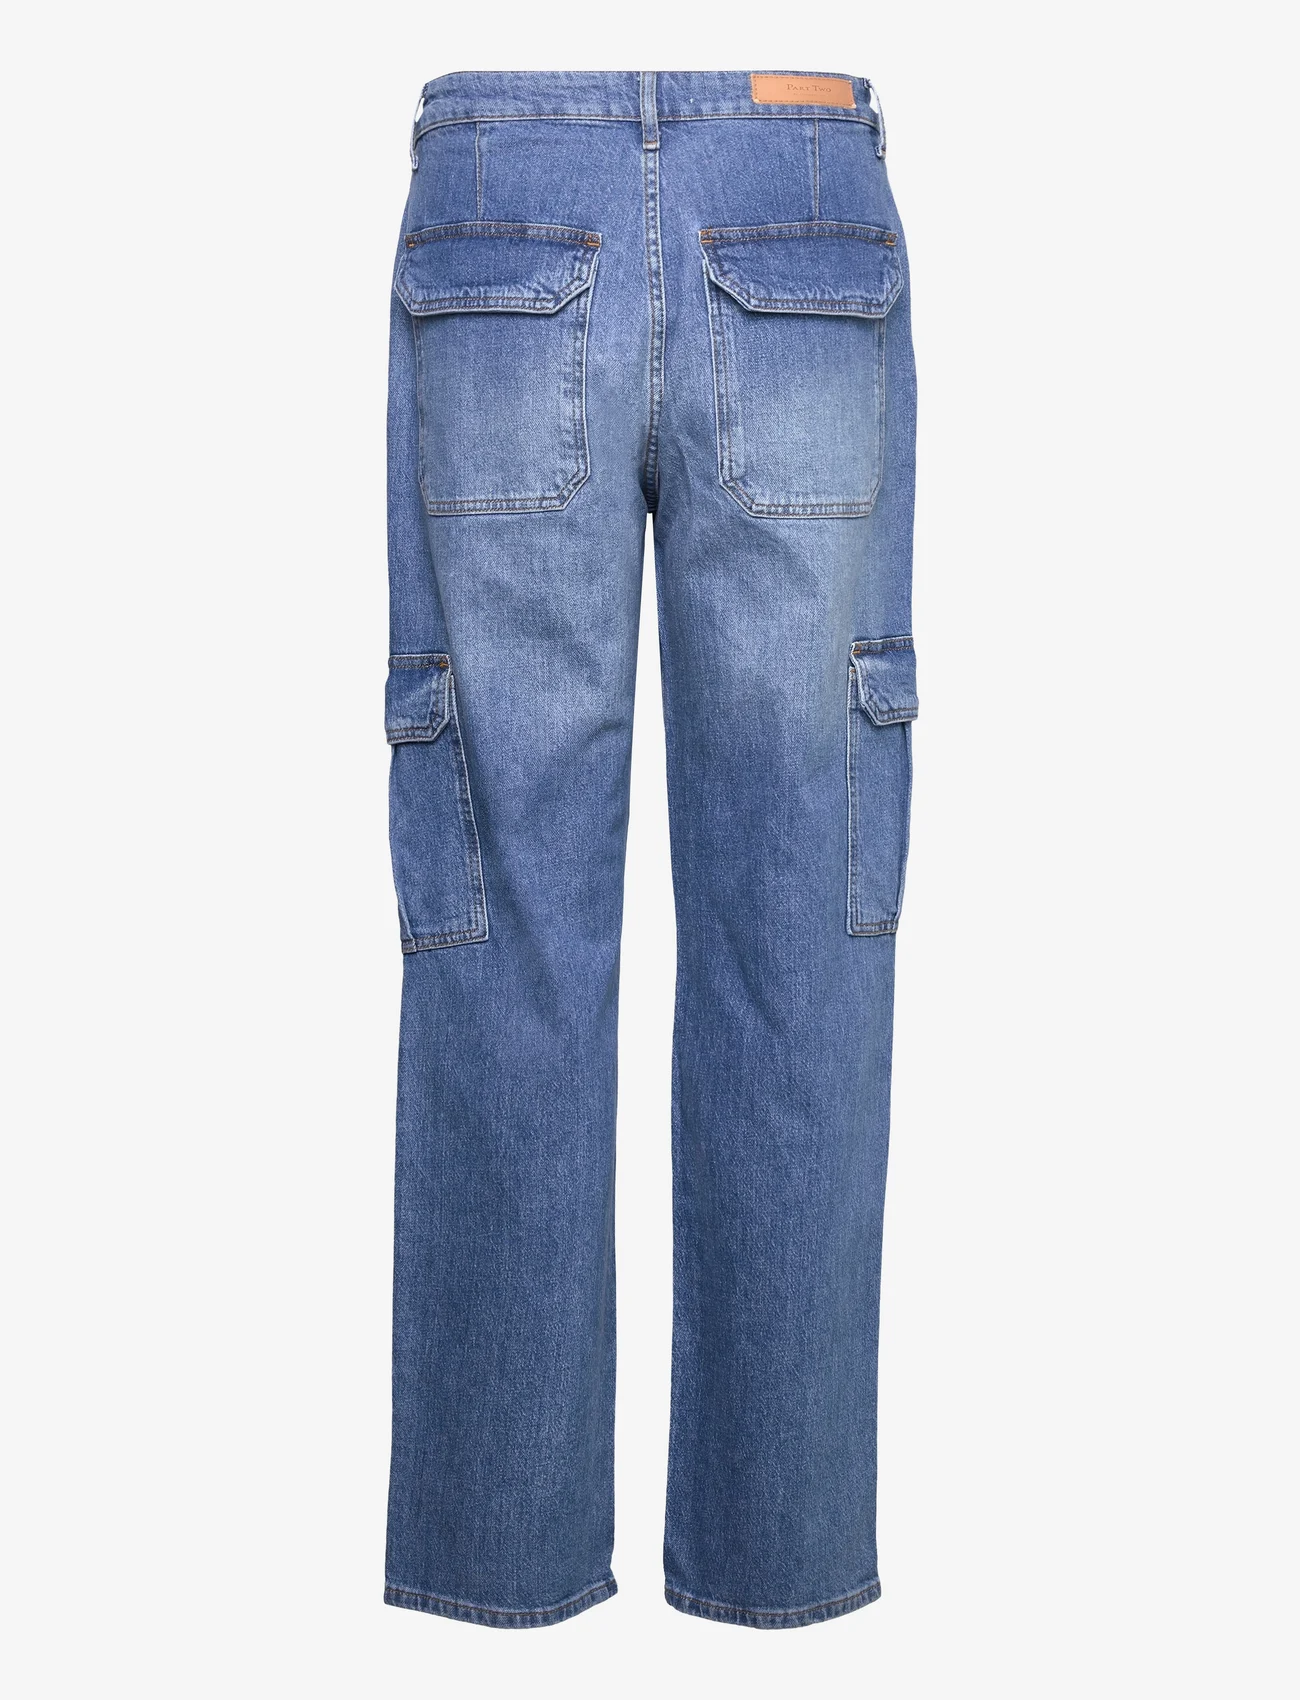 Part Two - RaynePW JE - straight jeans - light blue denim - 1